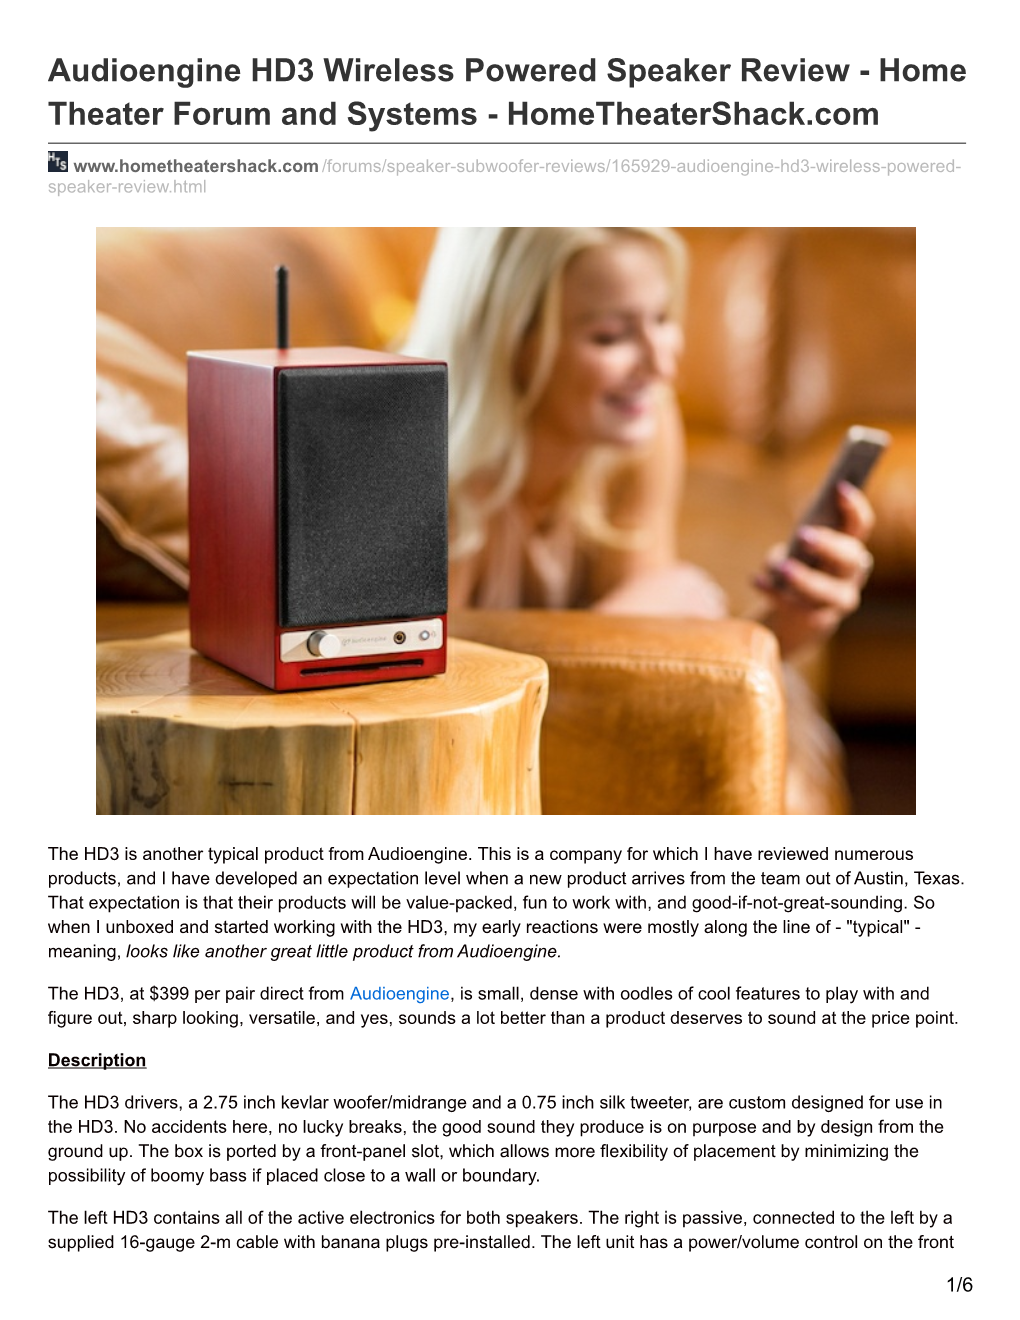 Audioengine HD3 Wireless Powered Speaker Review - Home Theater Forum and Systems - Hometheatershack.Com